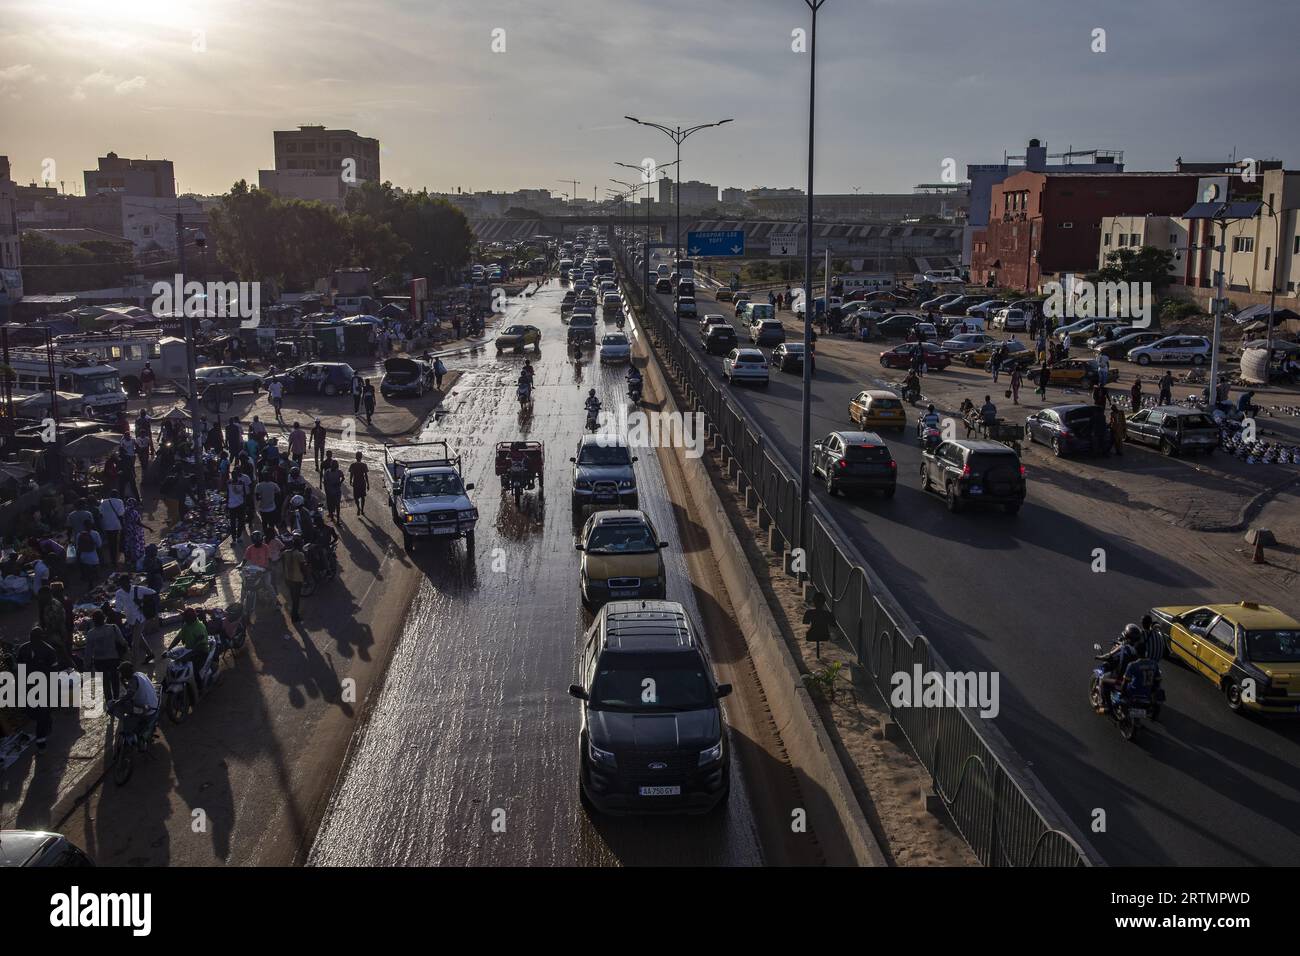 Evening traffic in Dakar, Senegal Stock Photo